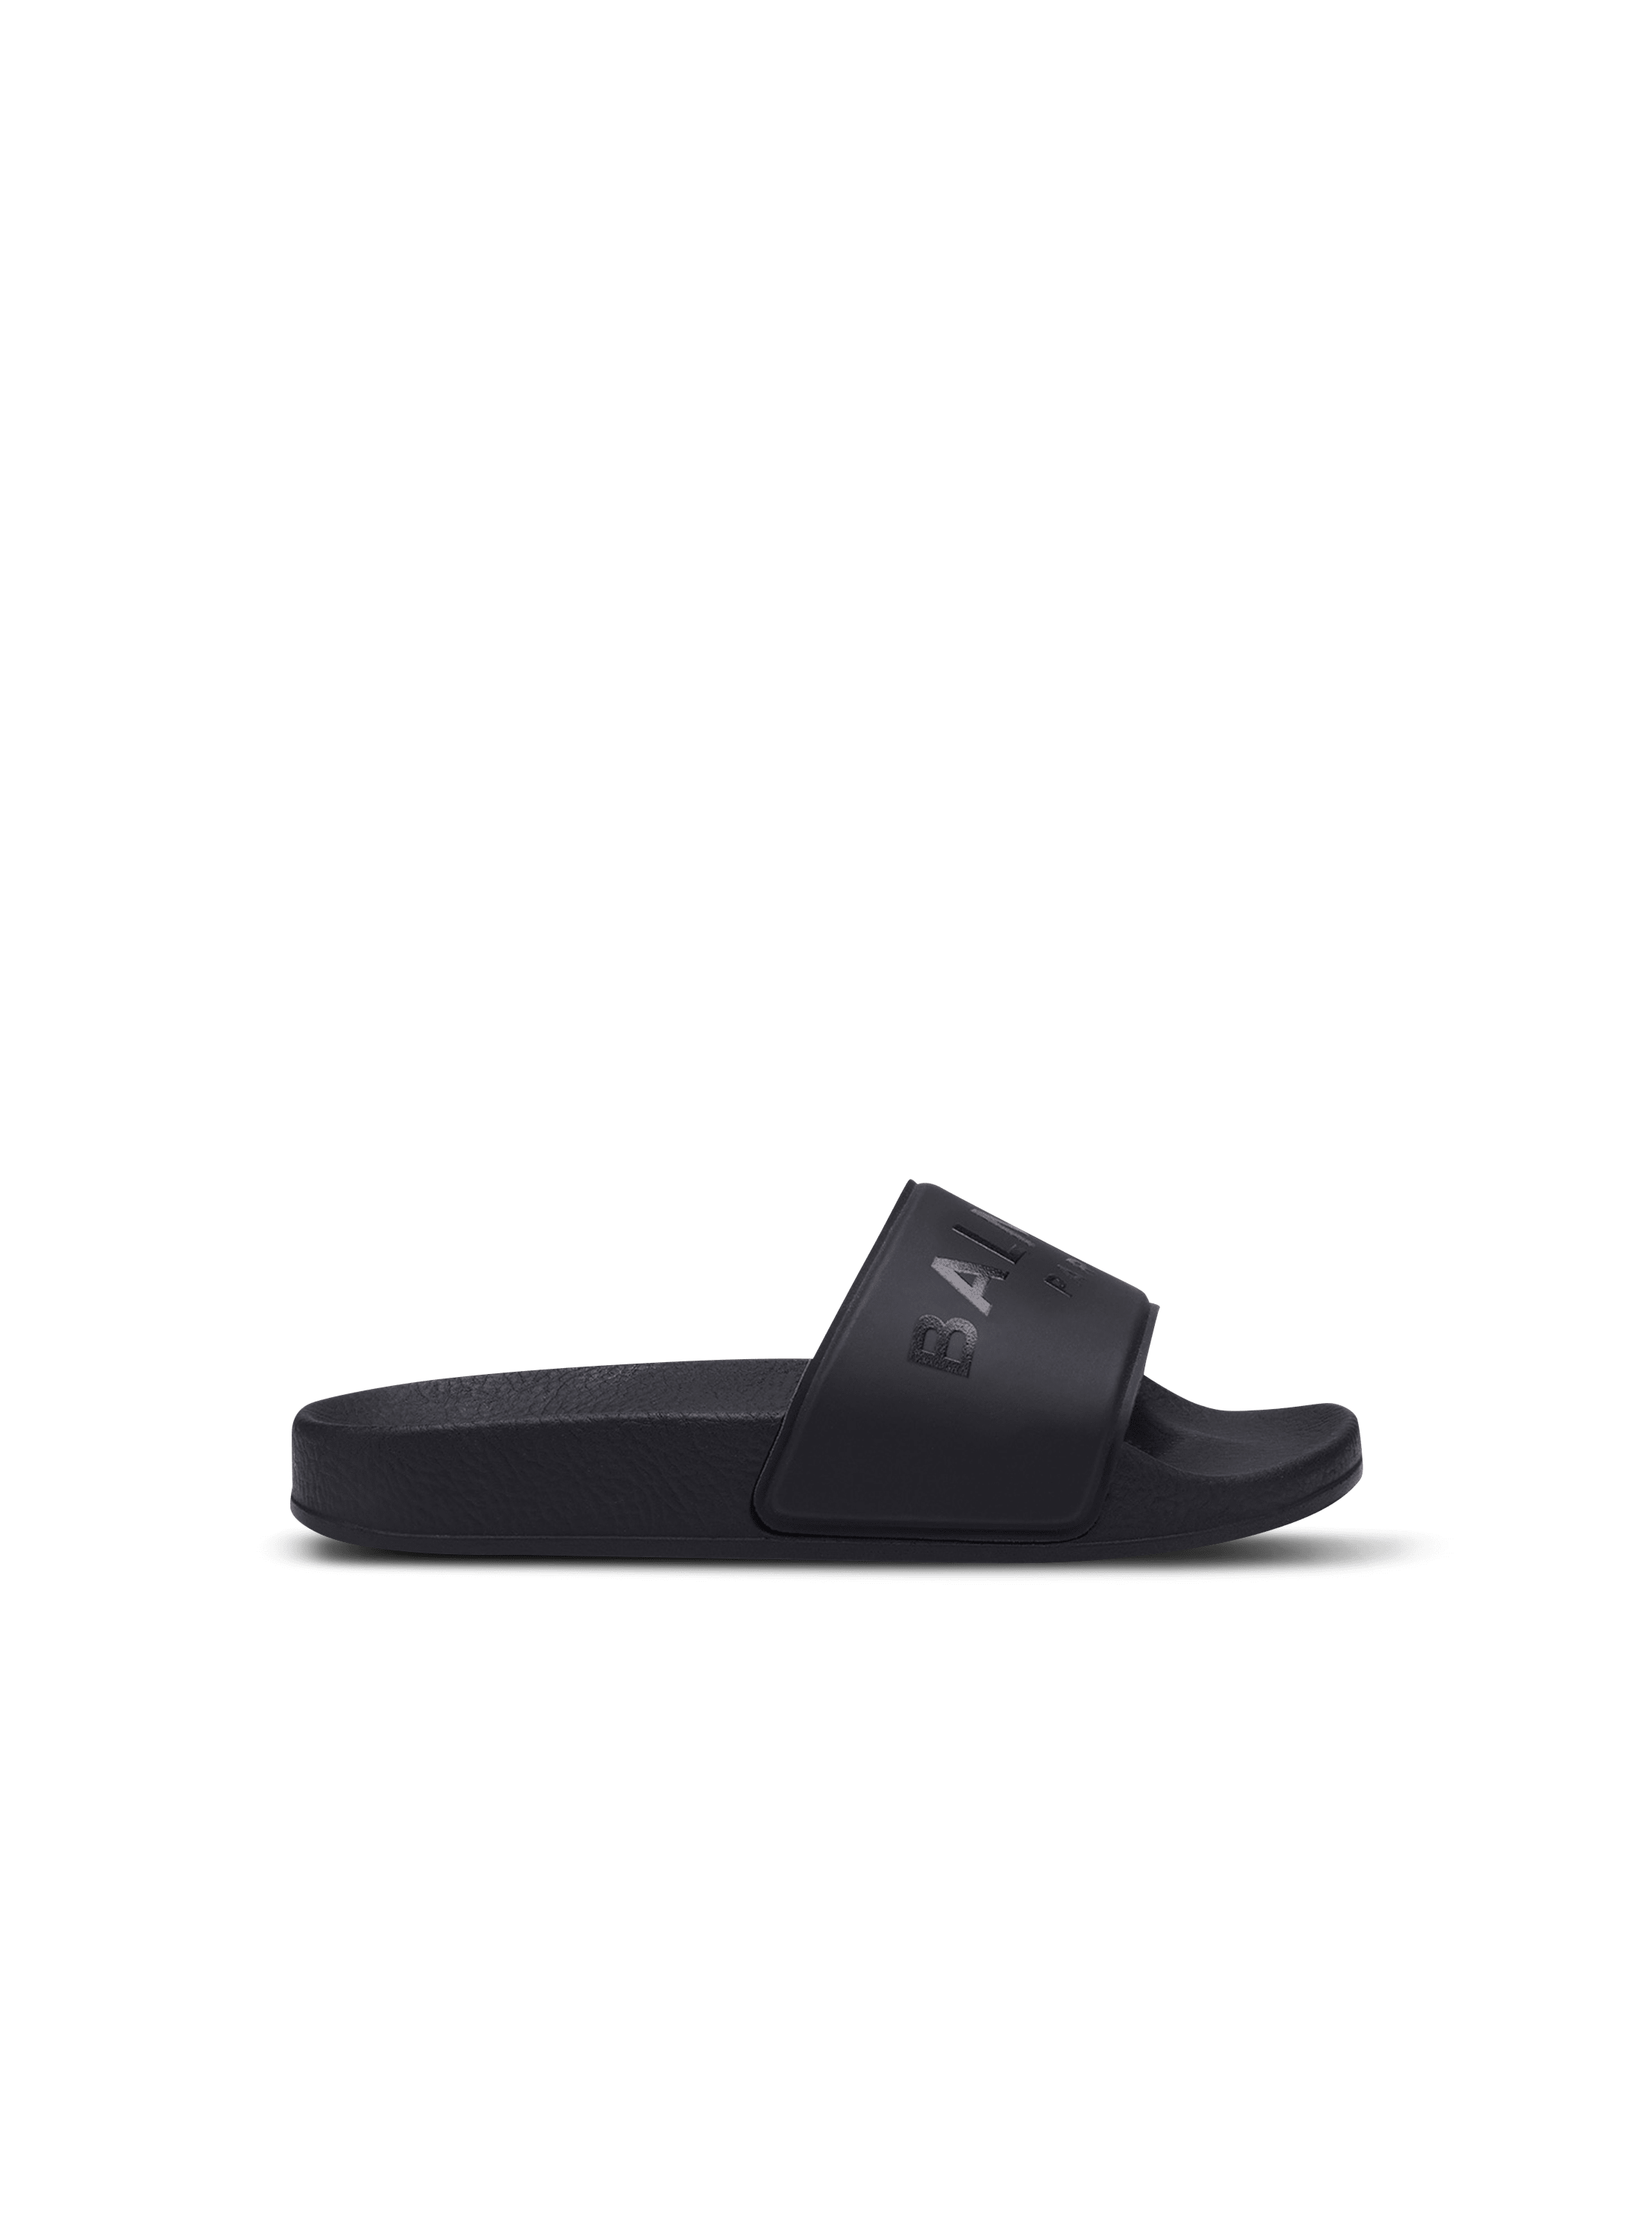 Sandals embossed with white Balmain logo